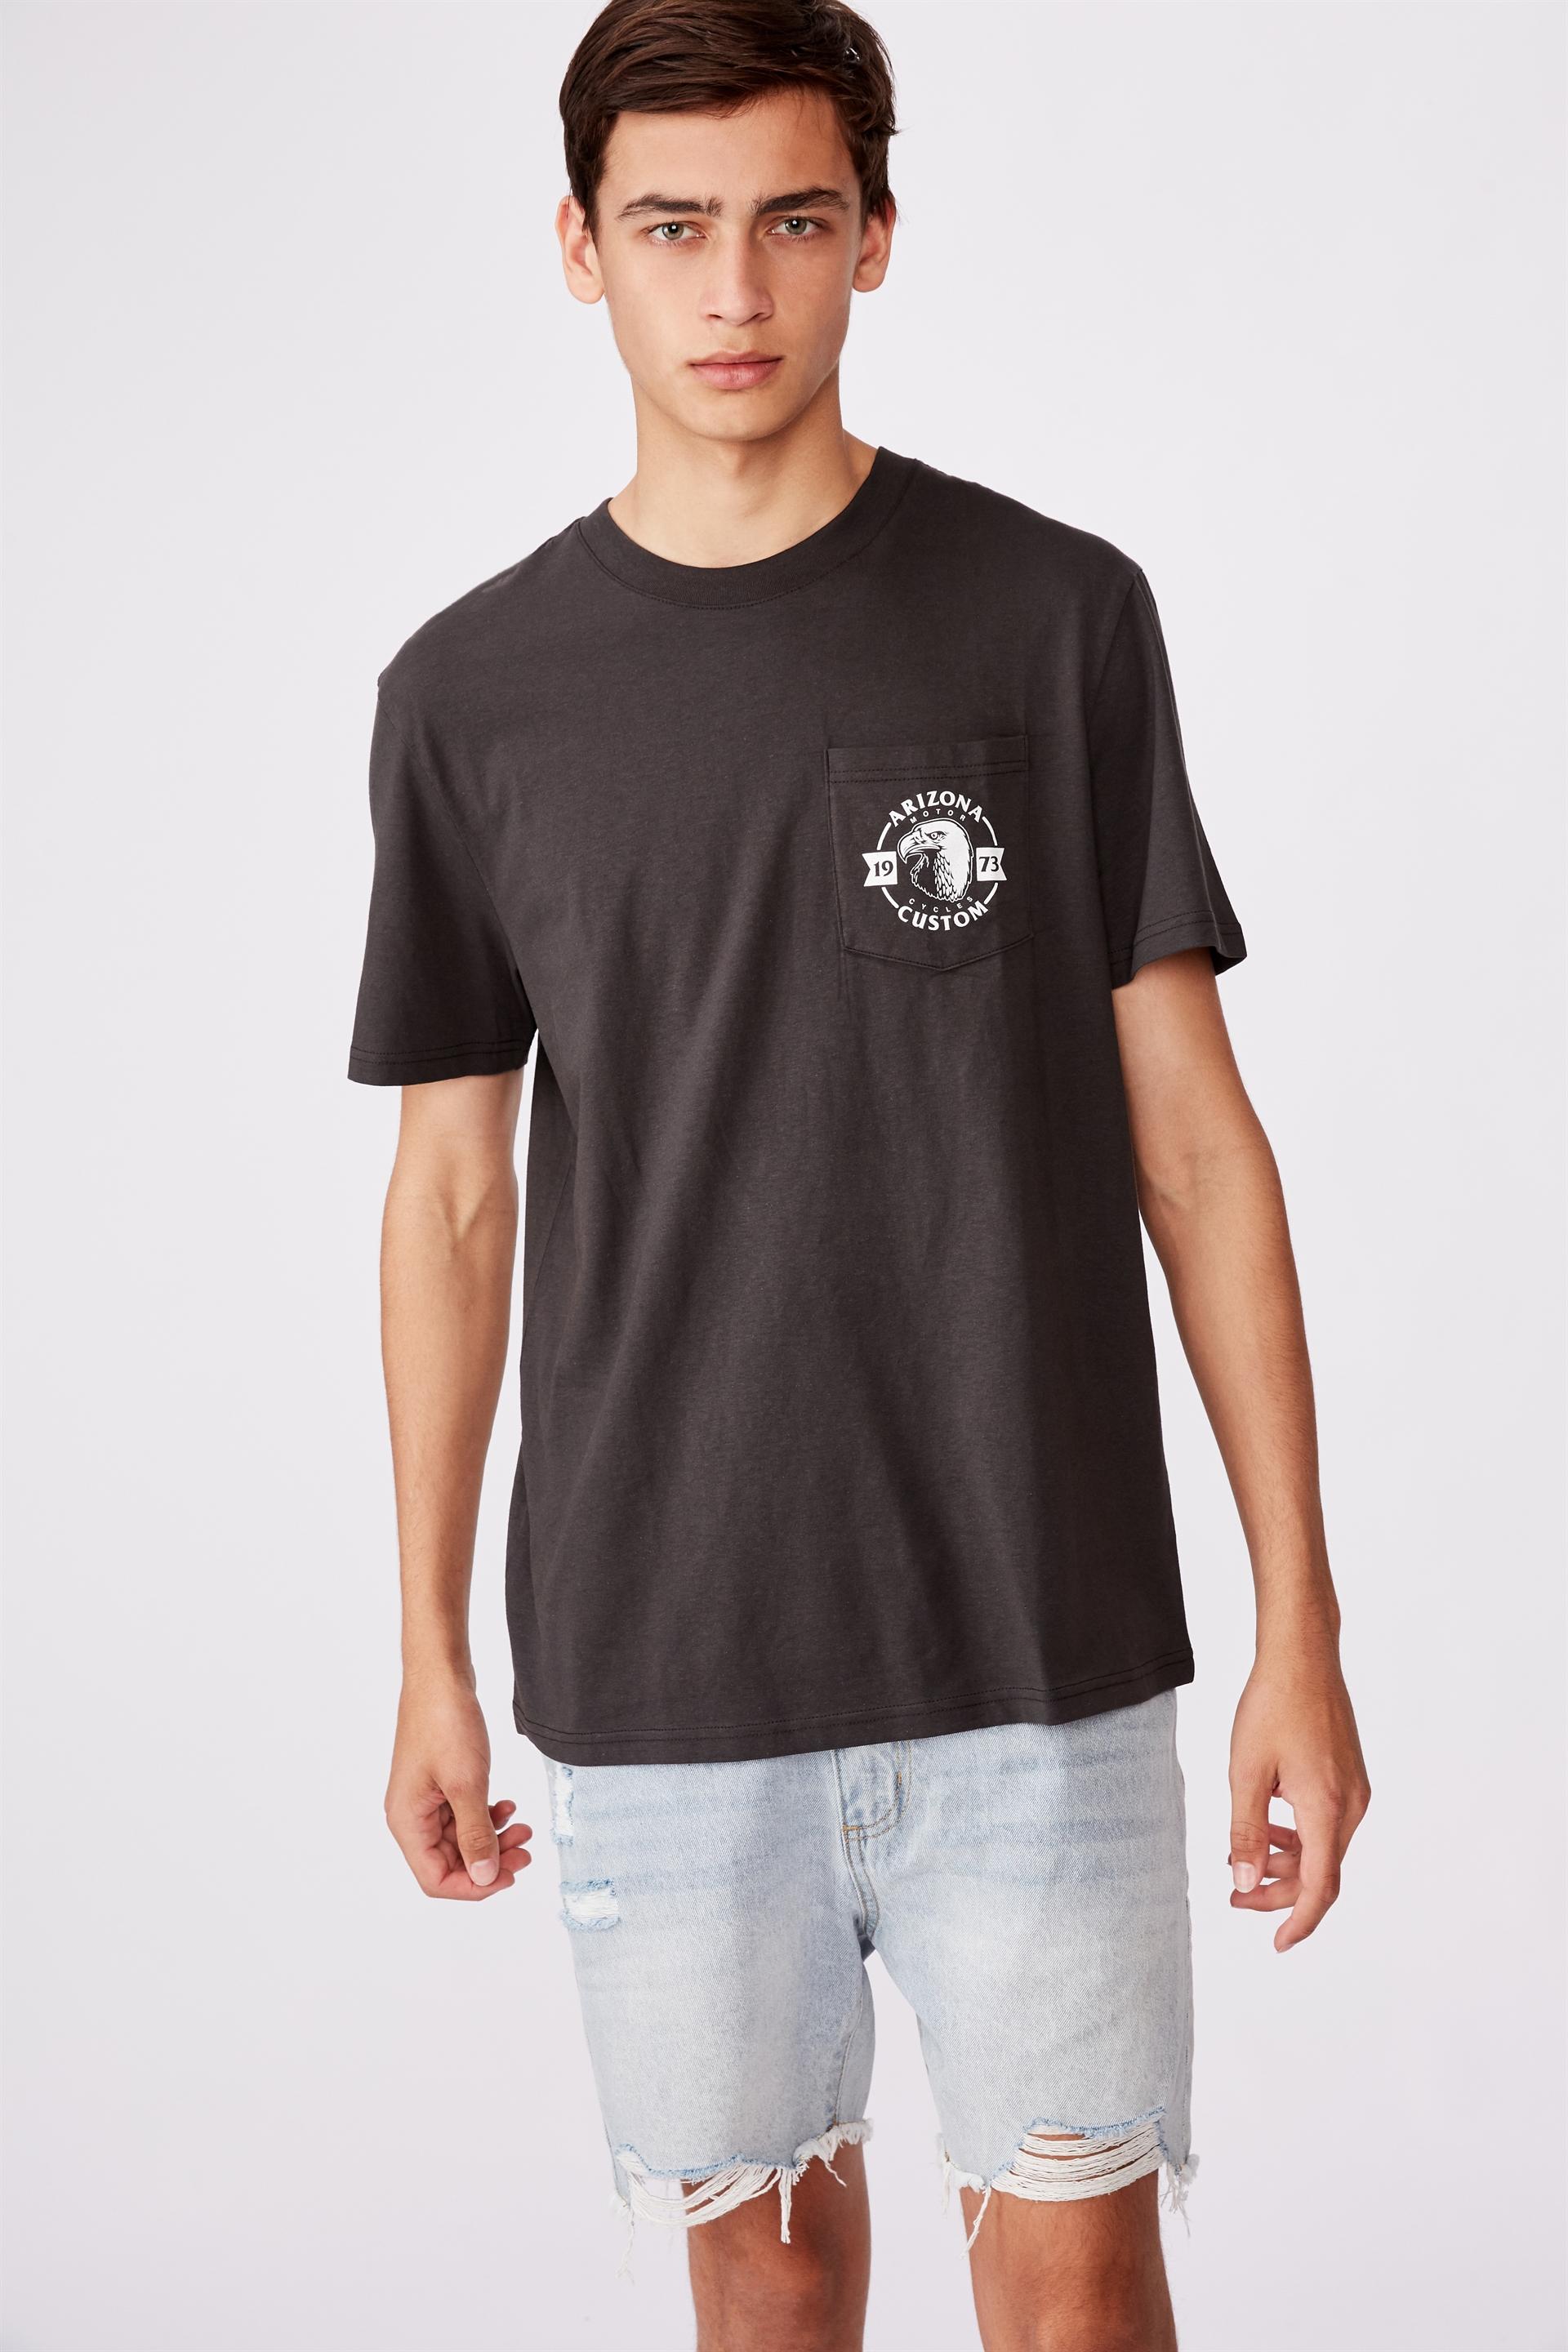 Arizona custom regular graphic pocket t shirt - pirate black Factorie T